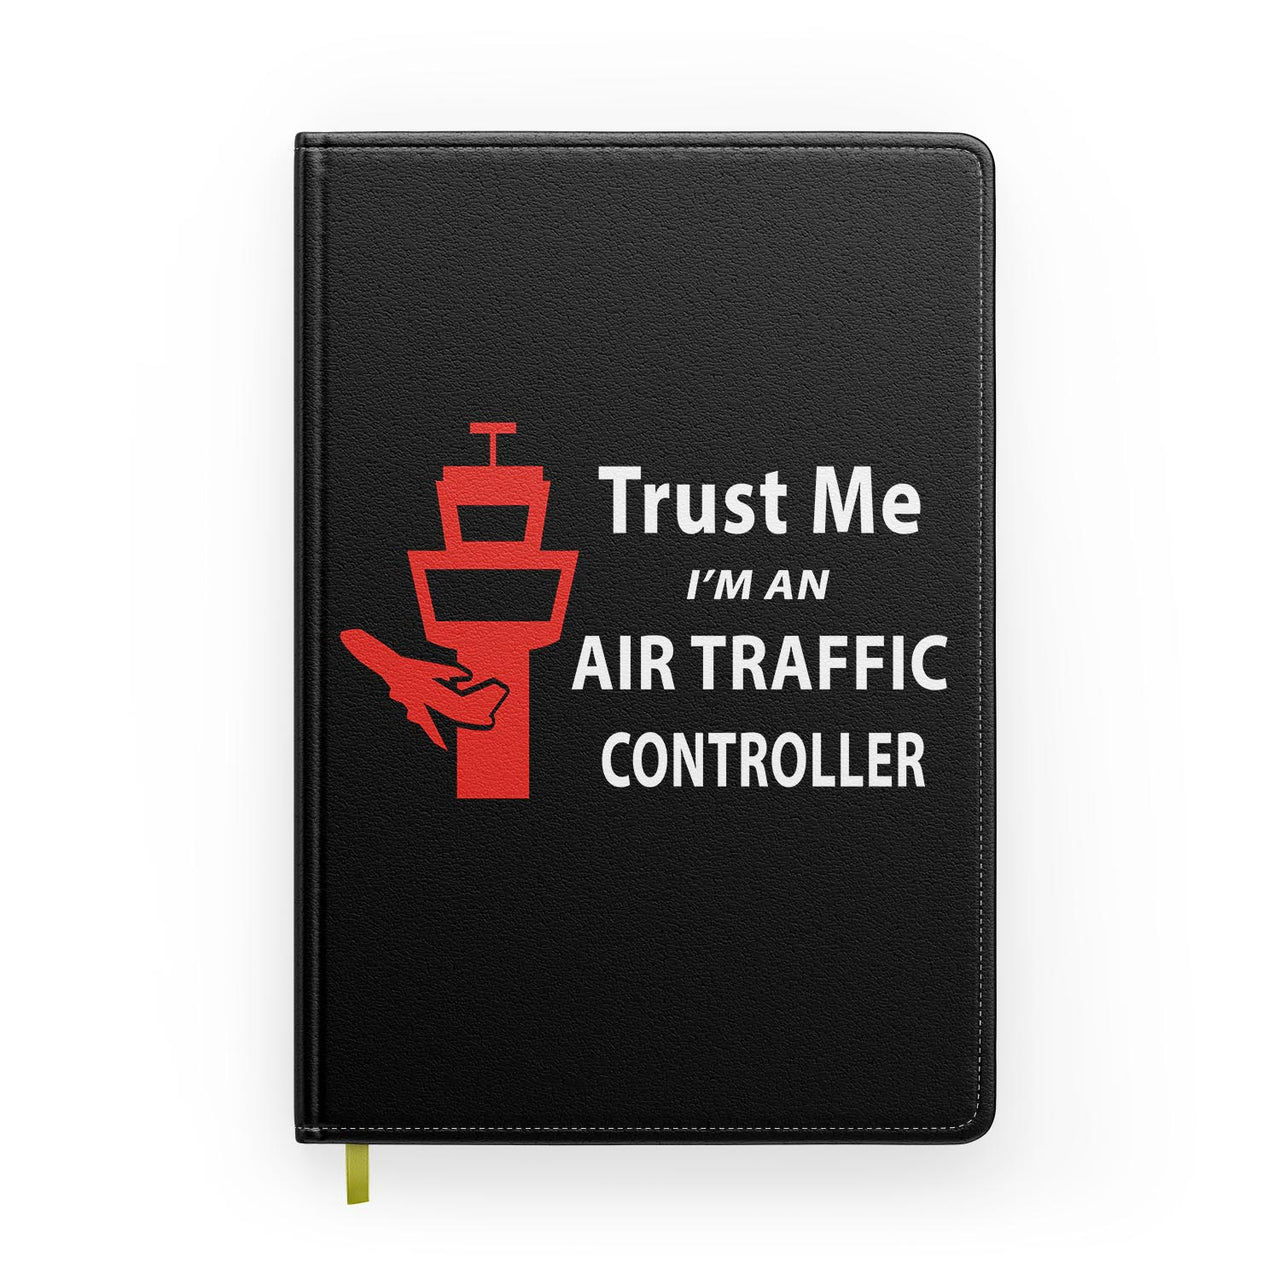 Trust Me I'm an Air Traffic Controller Designed Notebooks